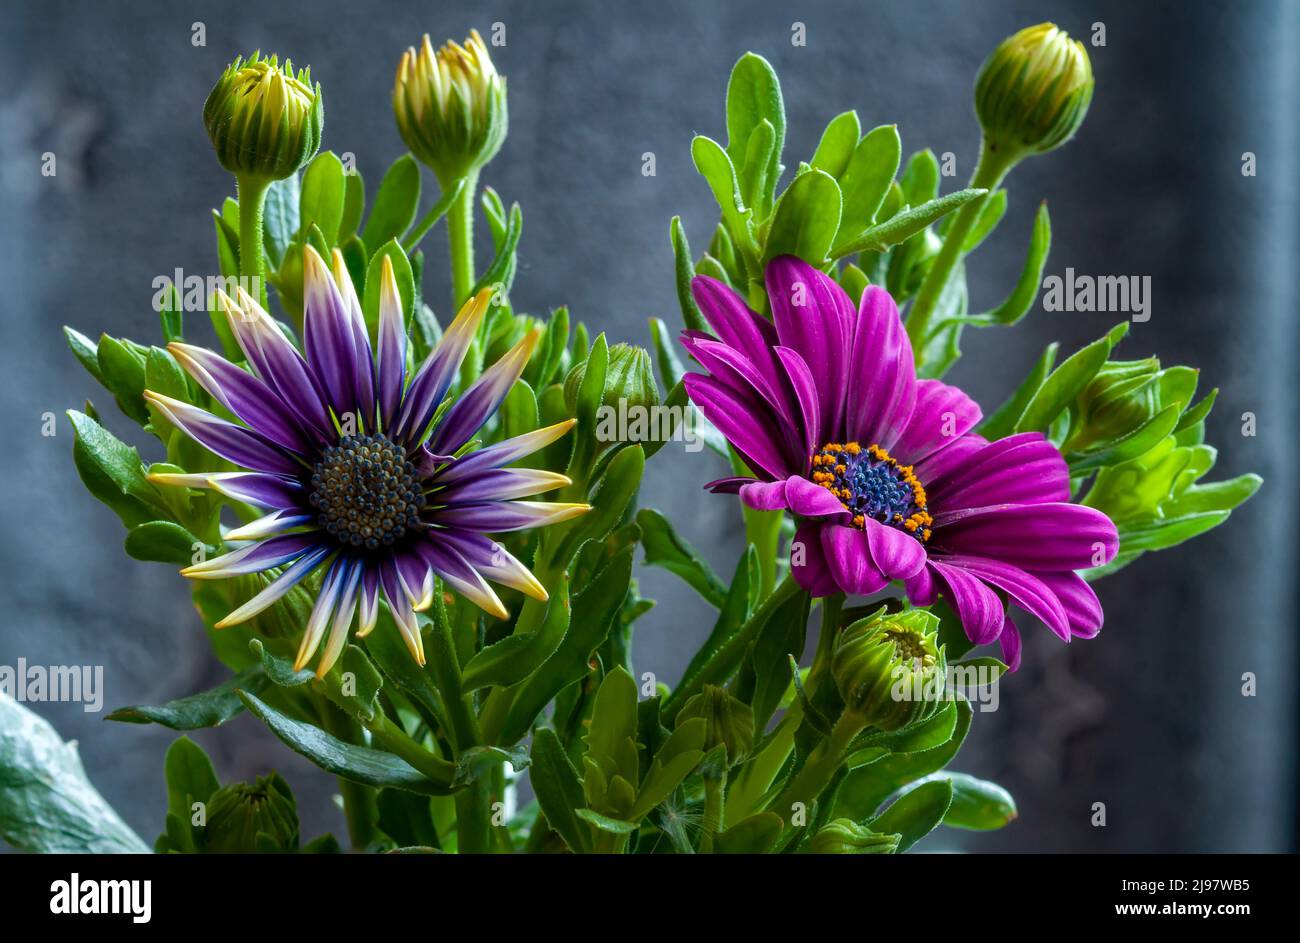 African daisy flower in shades of purple, Osteospermum ecklonis, alpine daisy, macro Stock Photo